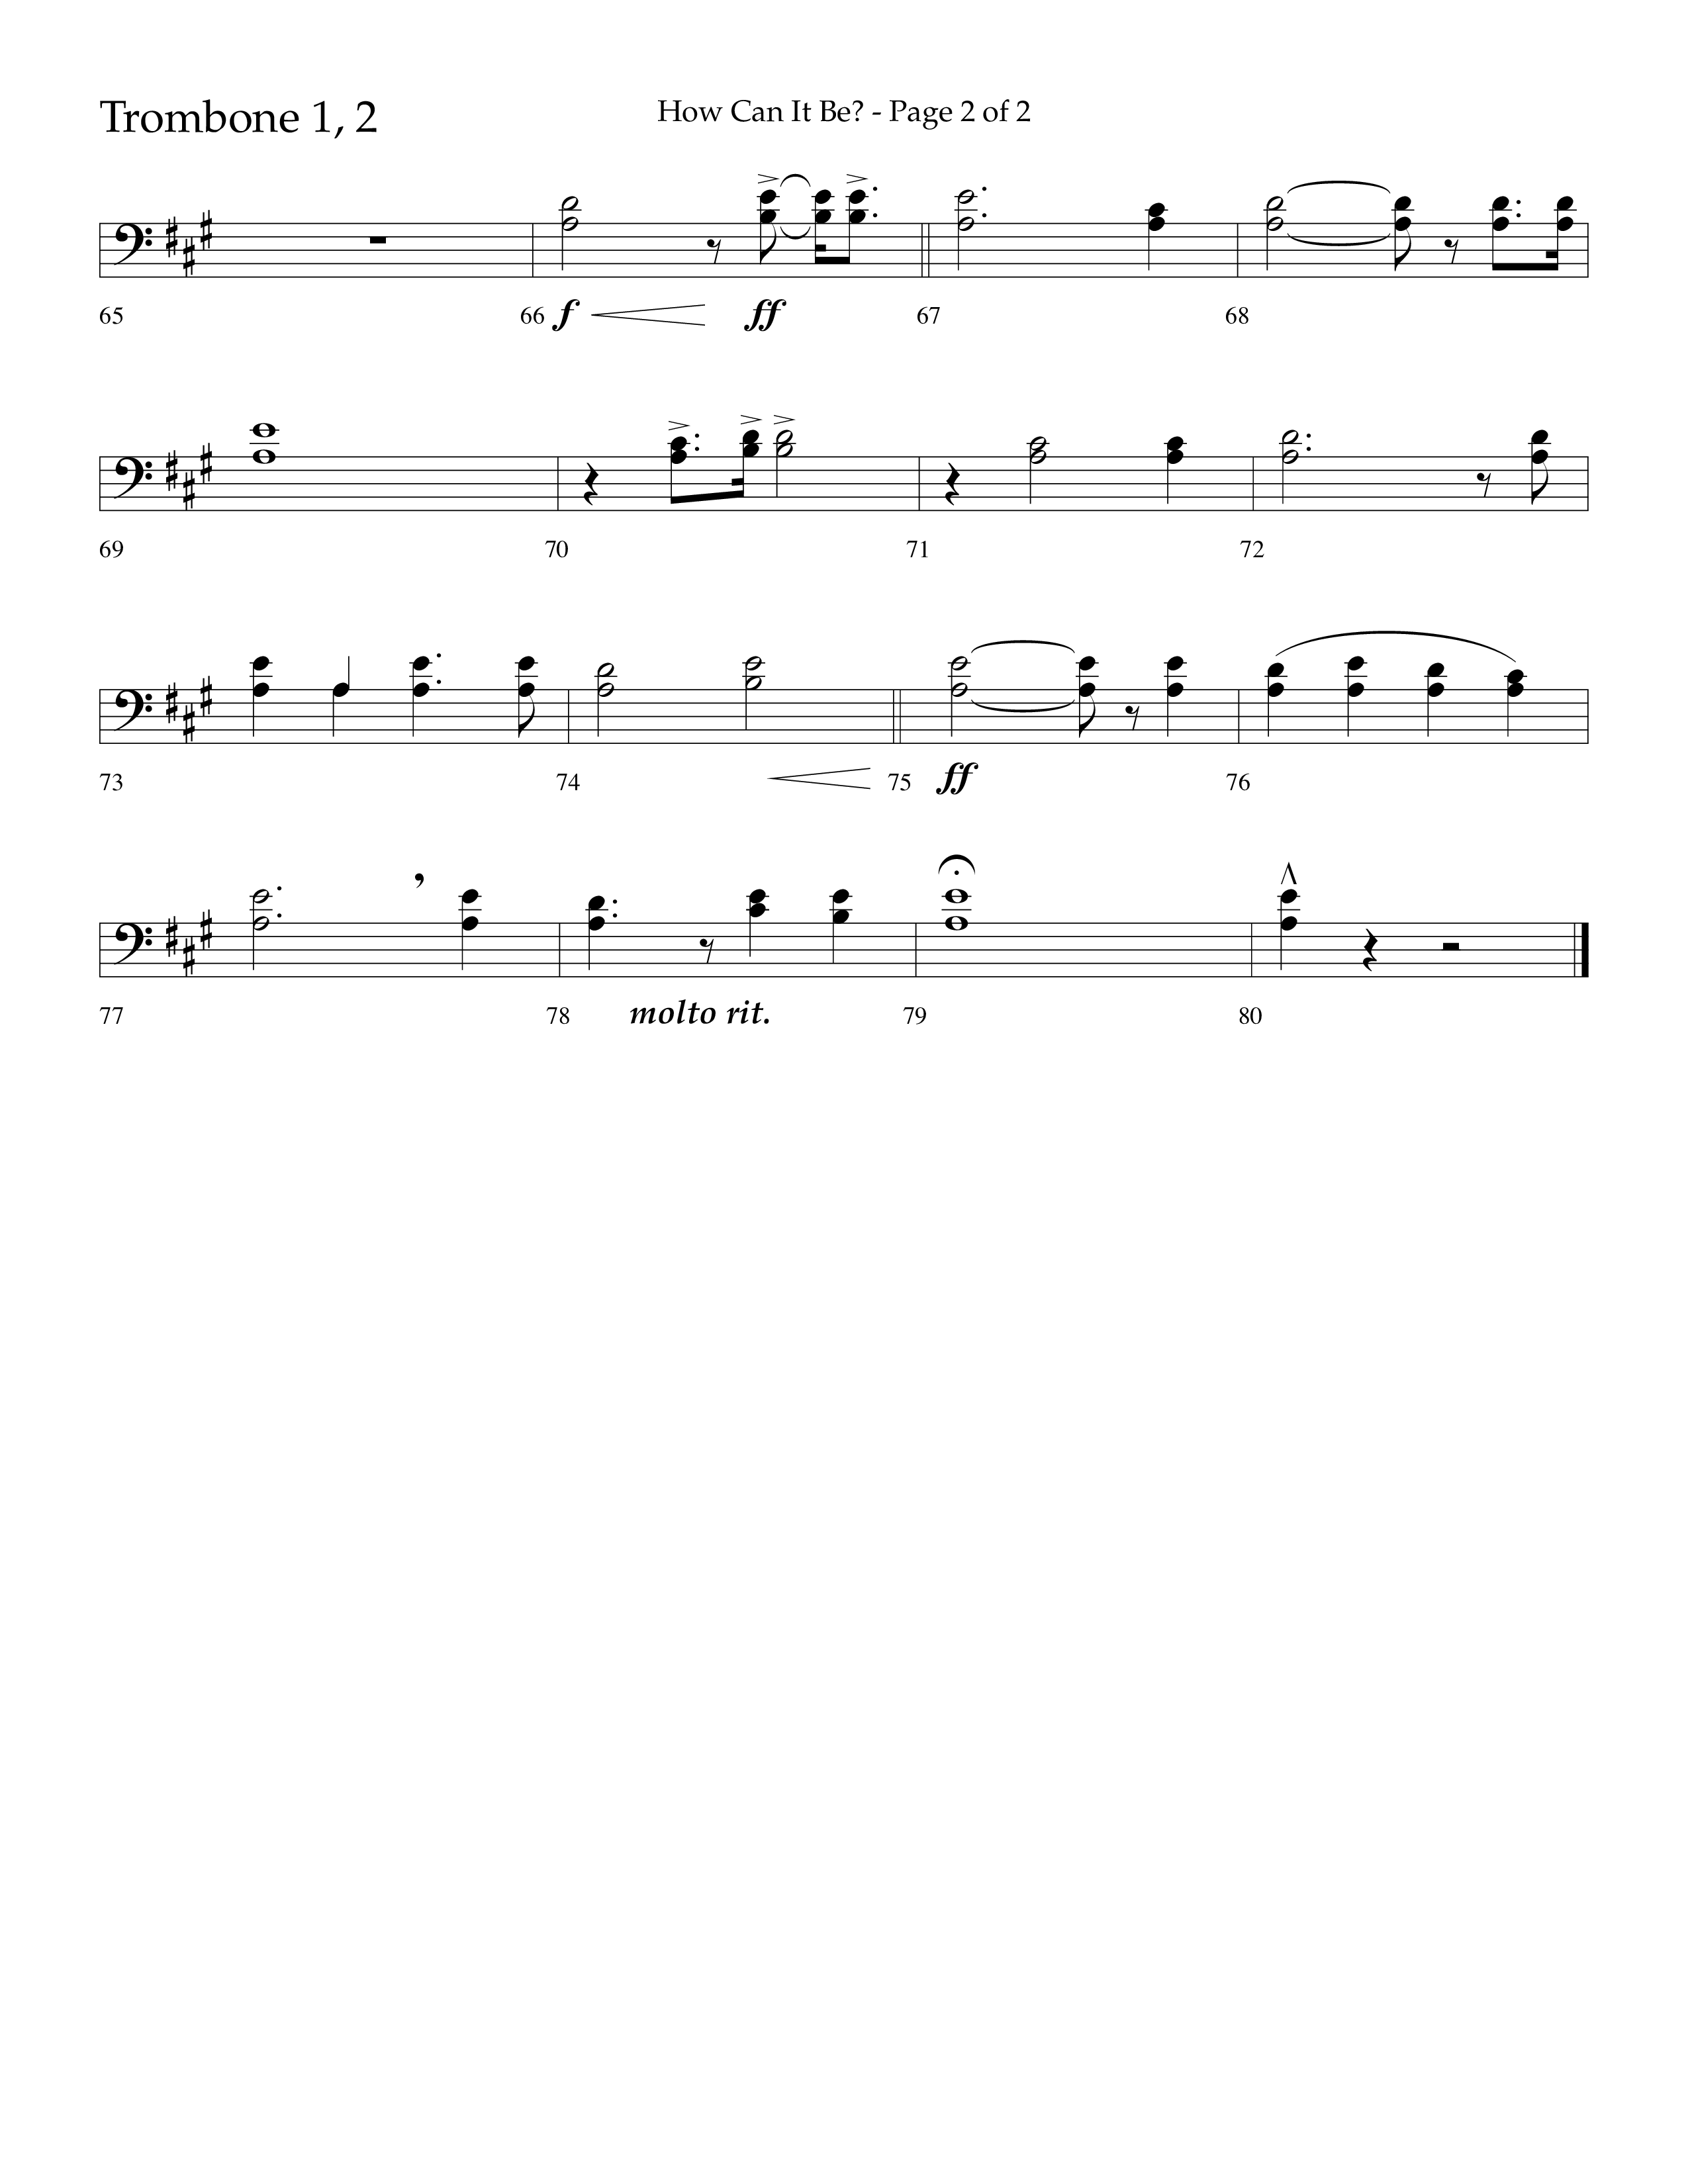 How Can It Be (Choral Anthem SATB) Trombone 1/2 (Lifeway Choral / Arr. Daniel Semsen)